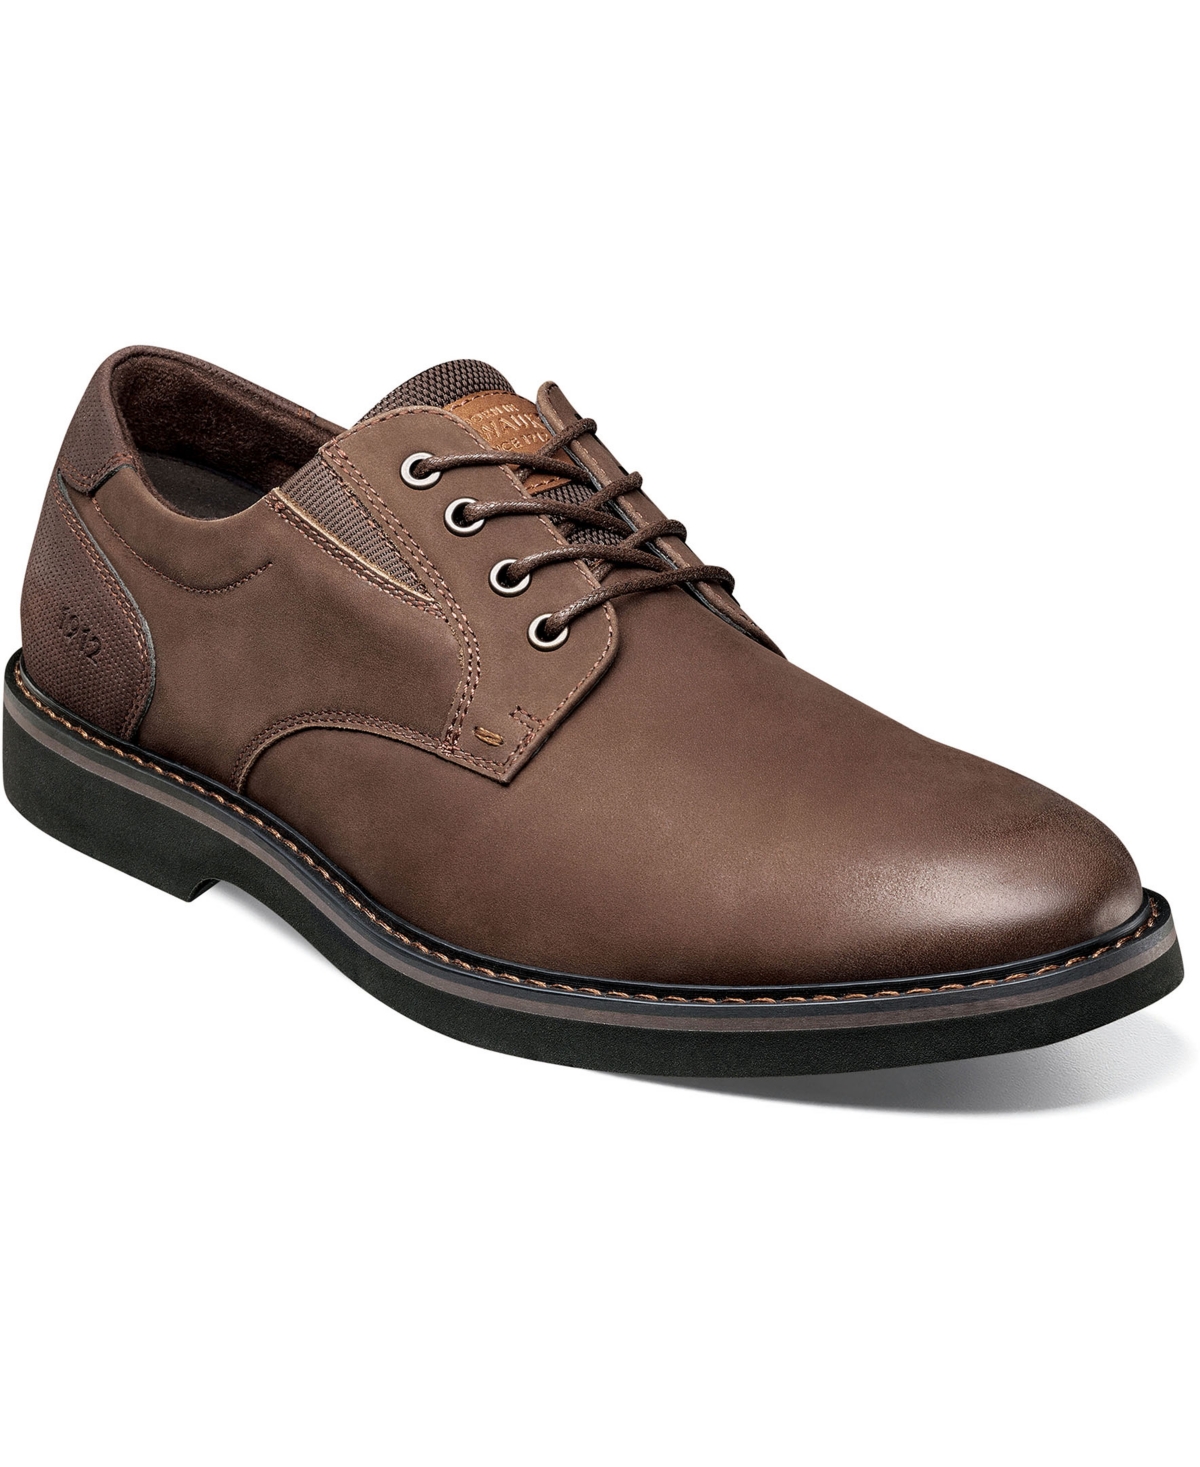 Men's Denali Waterproof Leather Plain Toe Oxford - Dark Brown